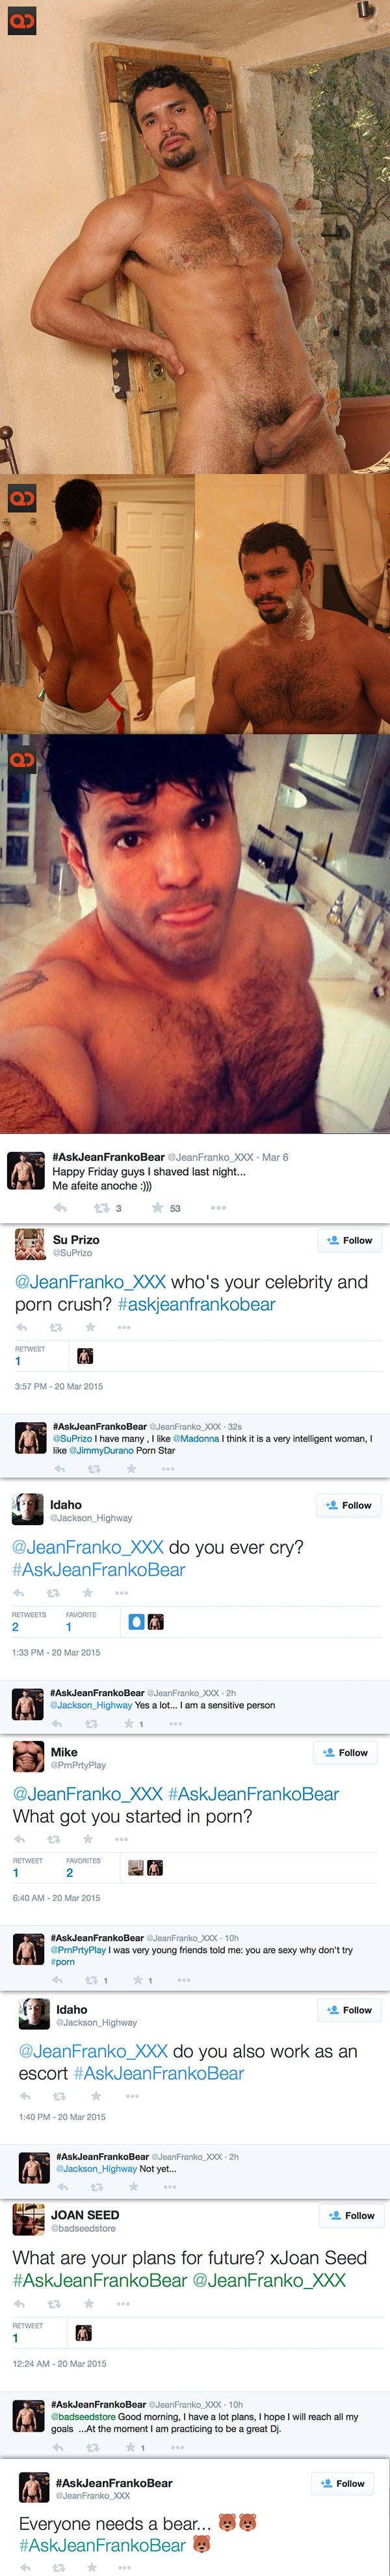 Spanish Porn Star Jean Franko Answers QC Readers Questions On Twitter - #AskJeanFrankoBear